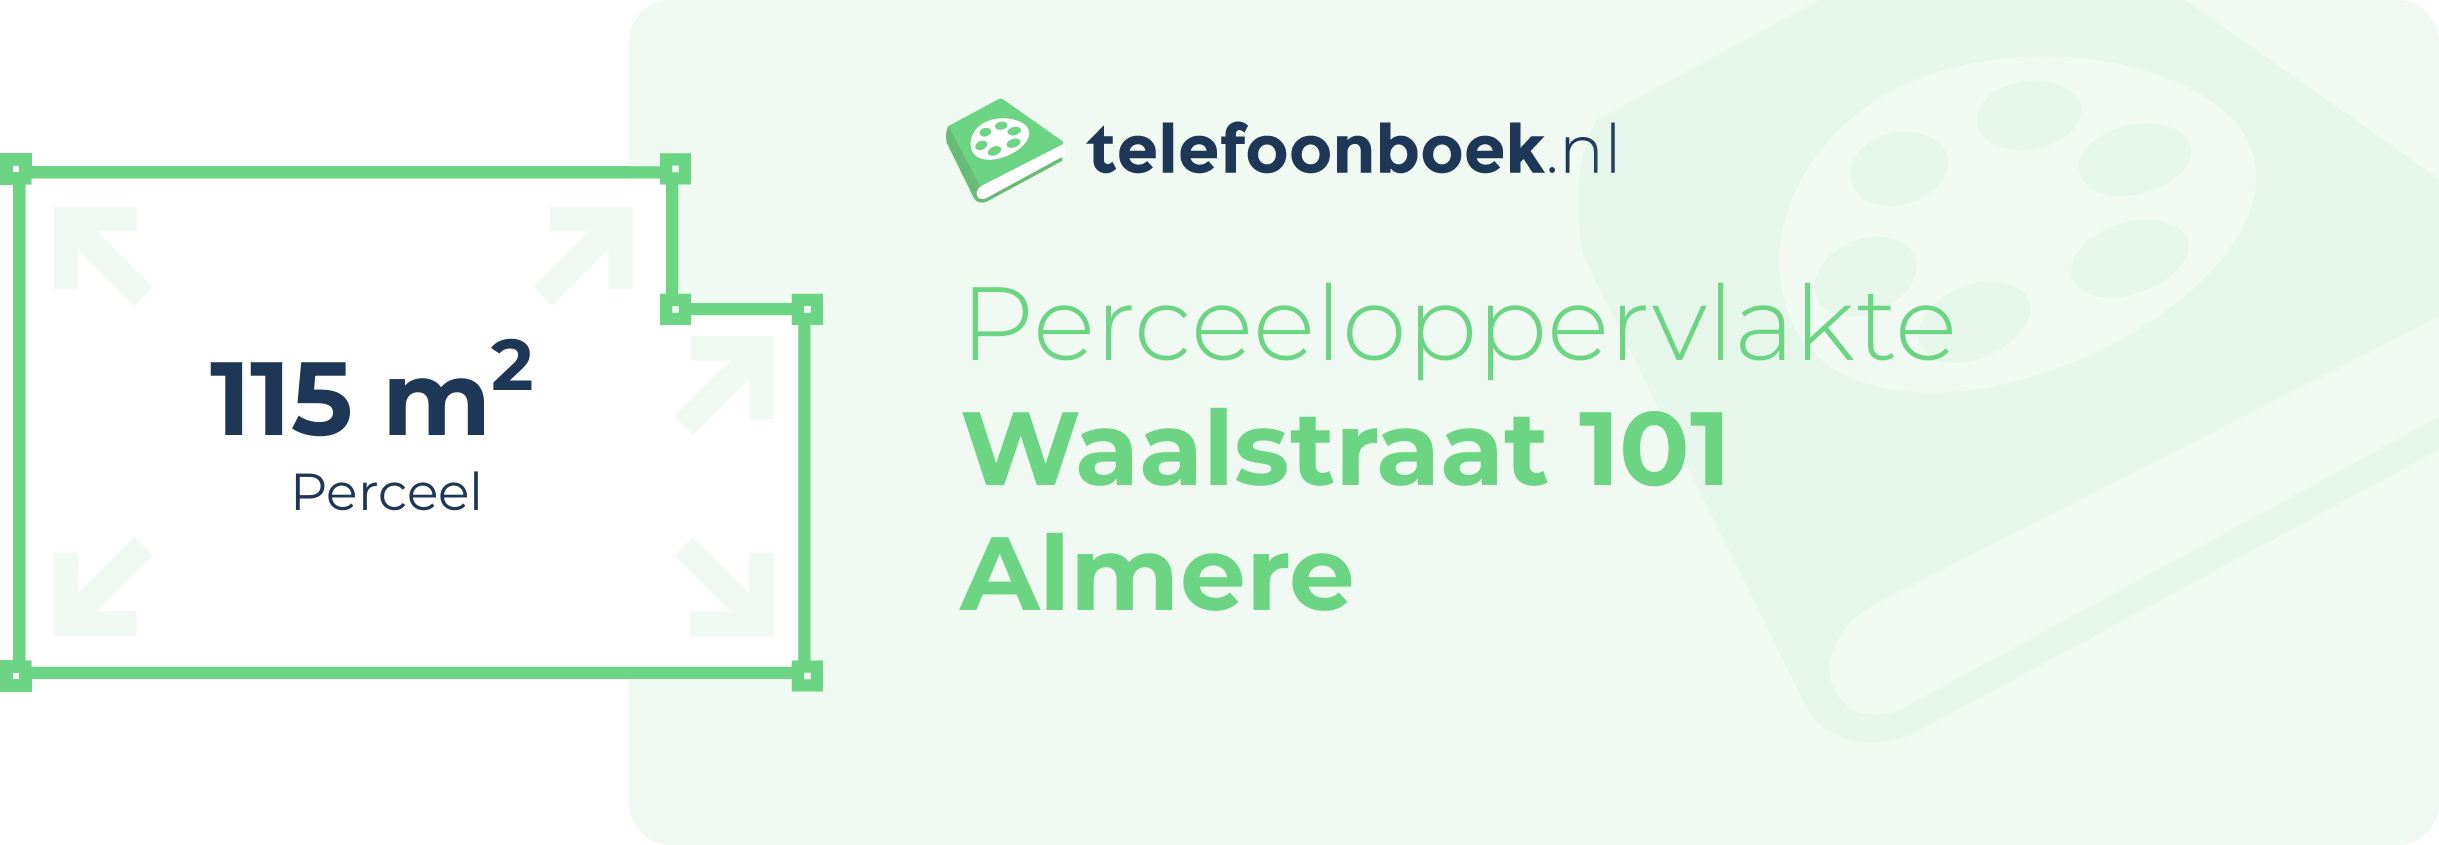 Perceeloppervlakte Waalstraat 101 Almere